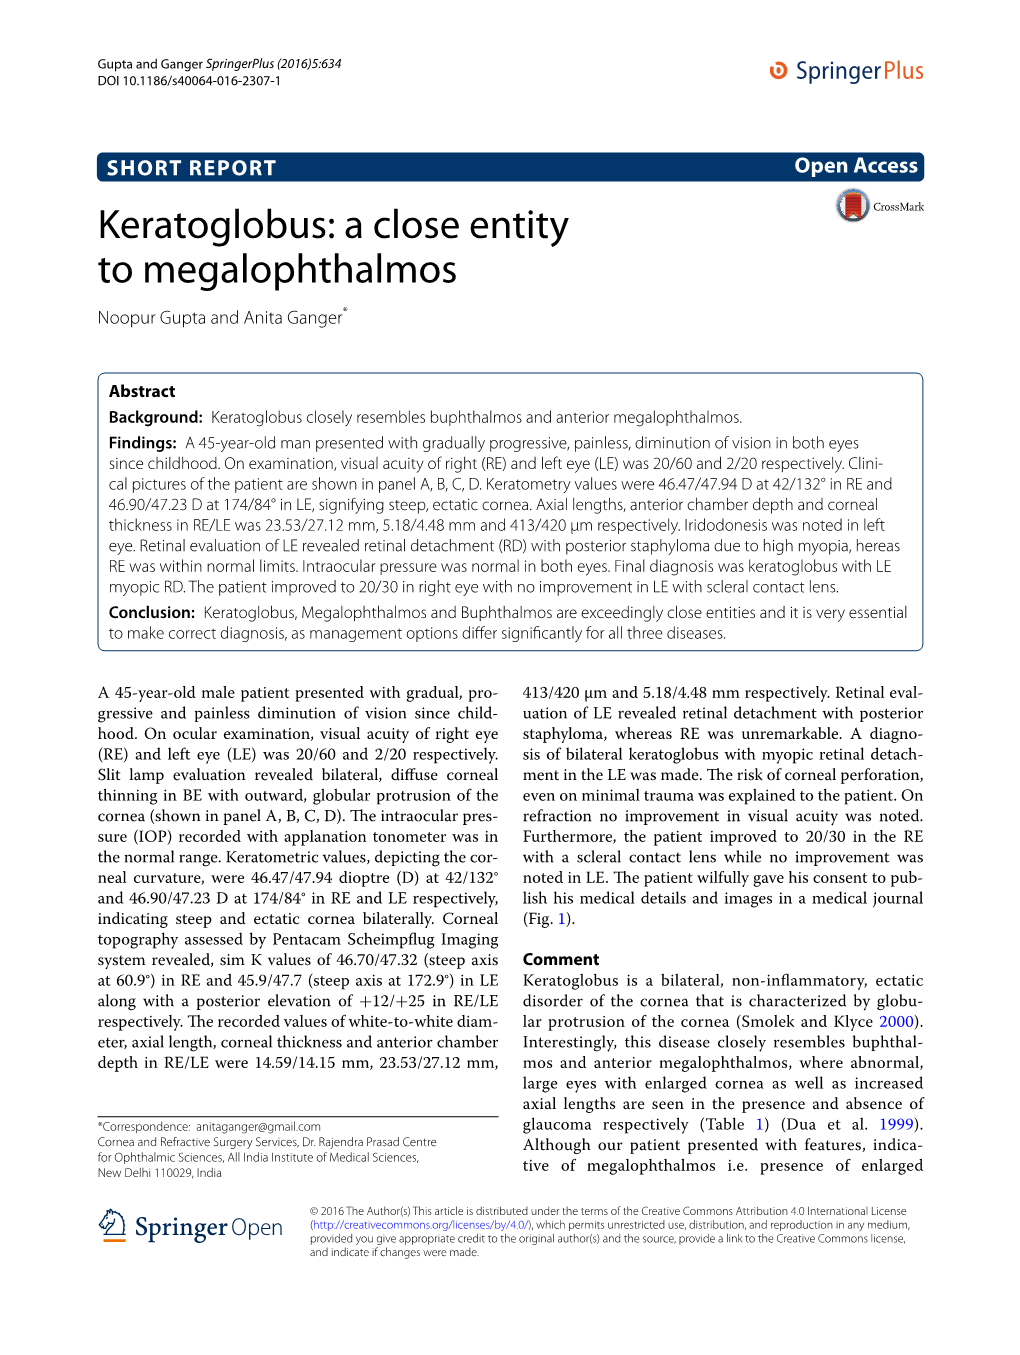 Keratoglobus: a Close Entity to Megalophthalmos Noopur Gupta and Anita Ganger*